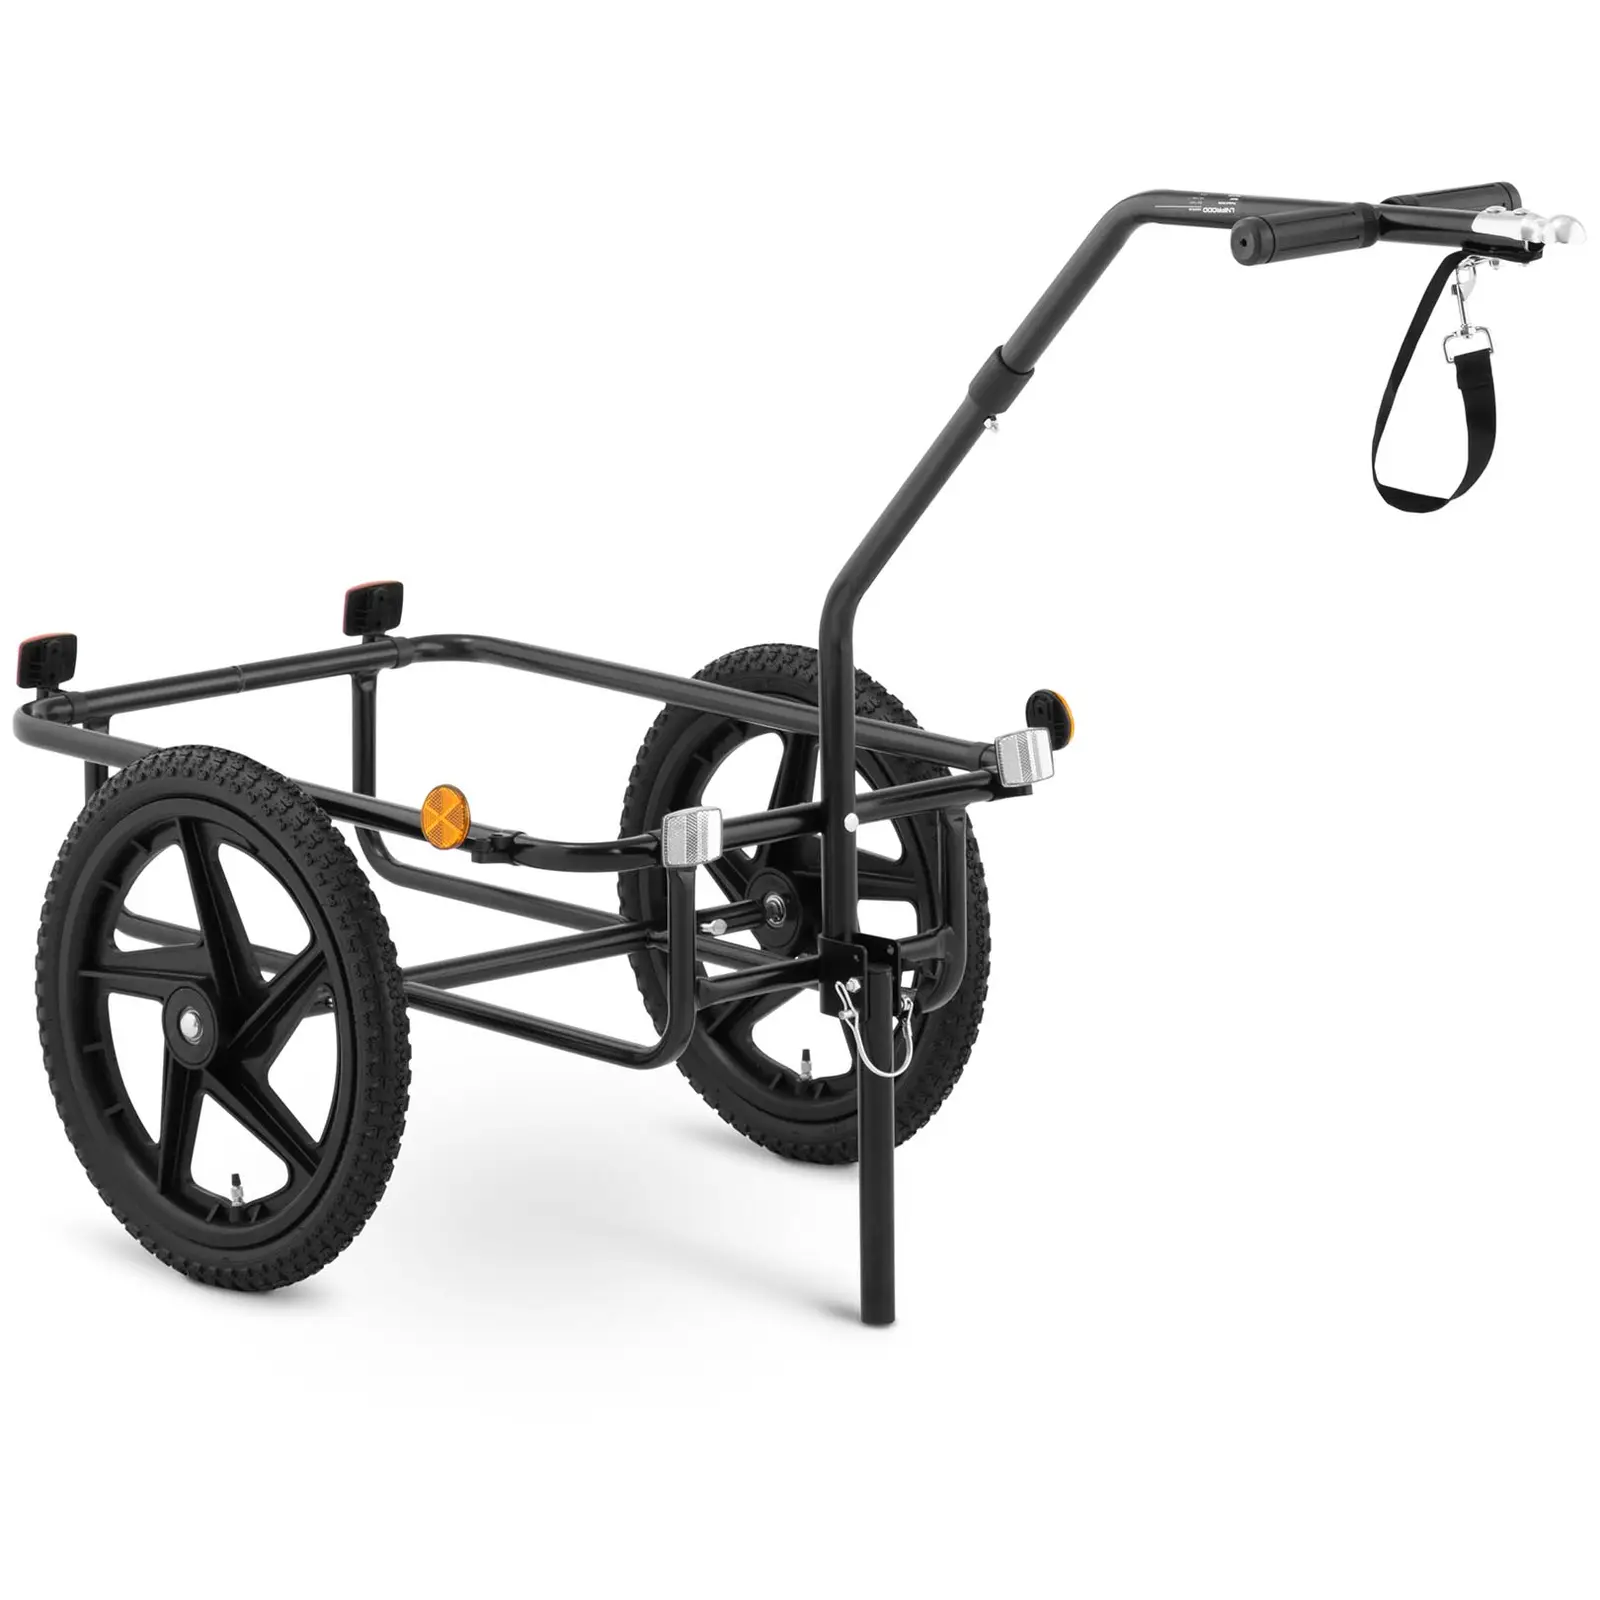 Carrello bici - 35 kg - Catarifrangenti